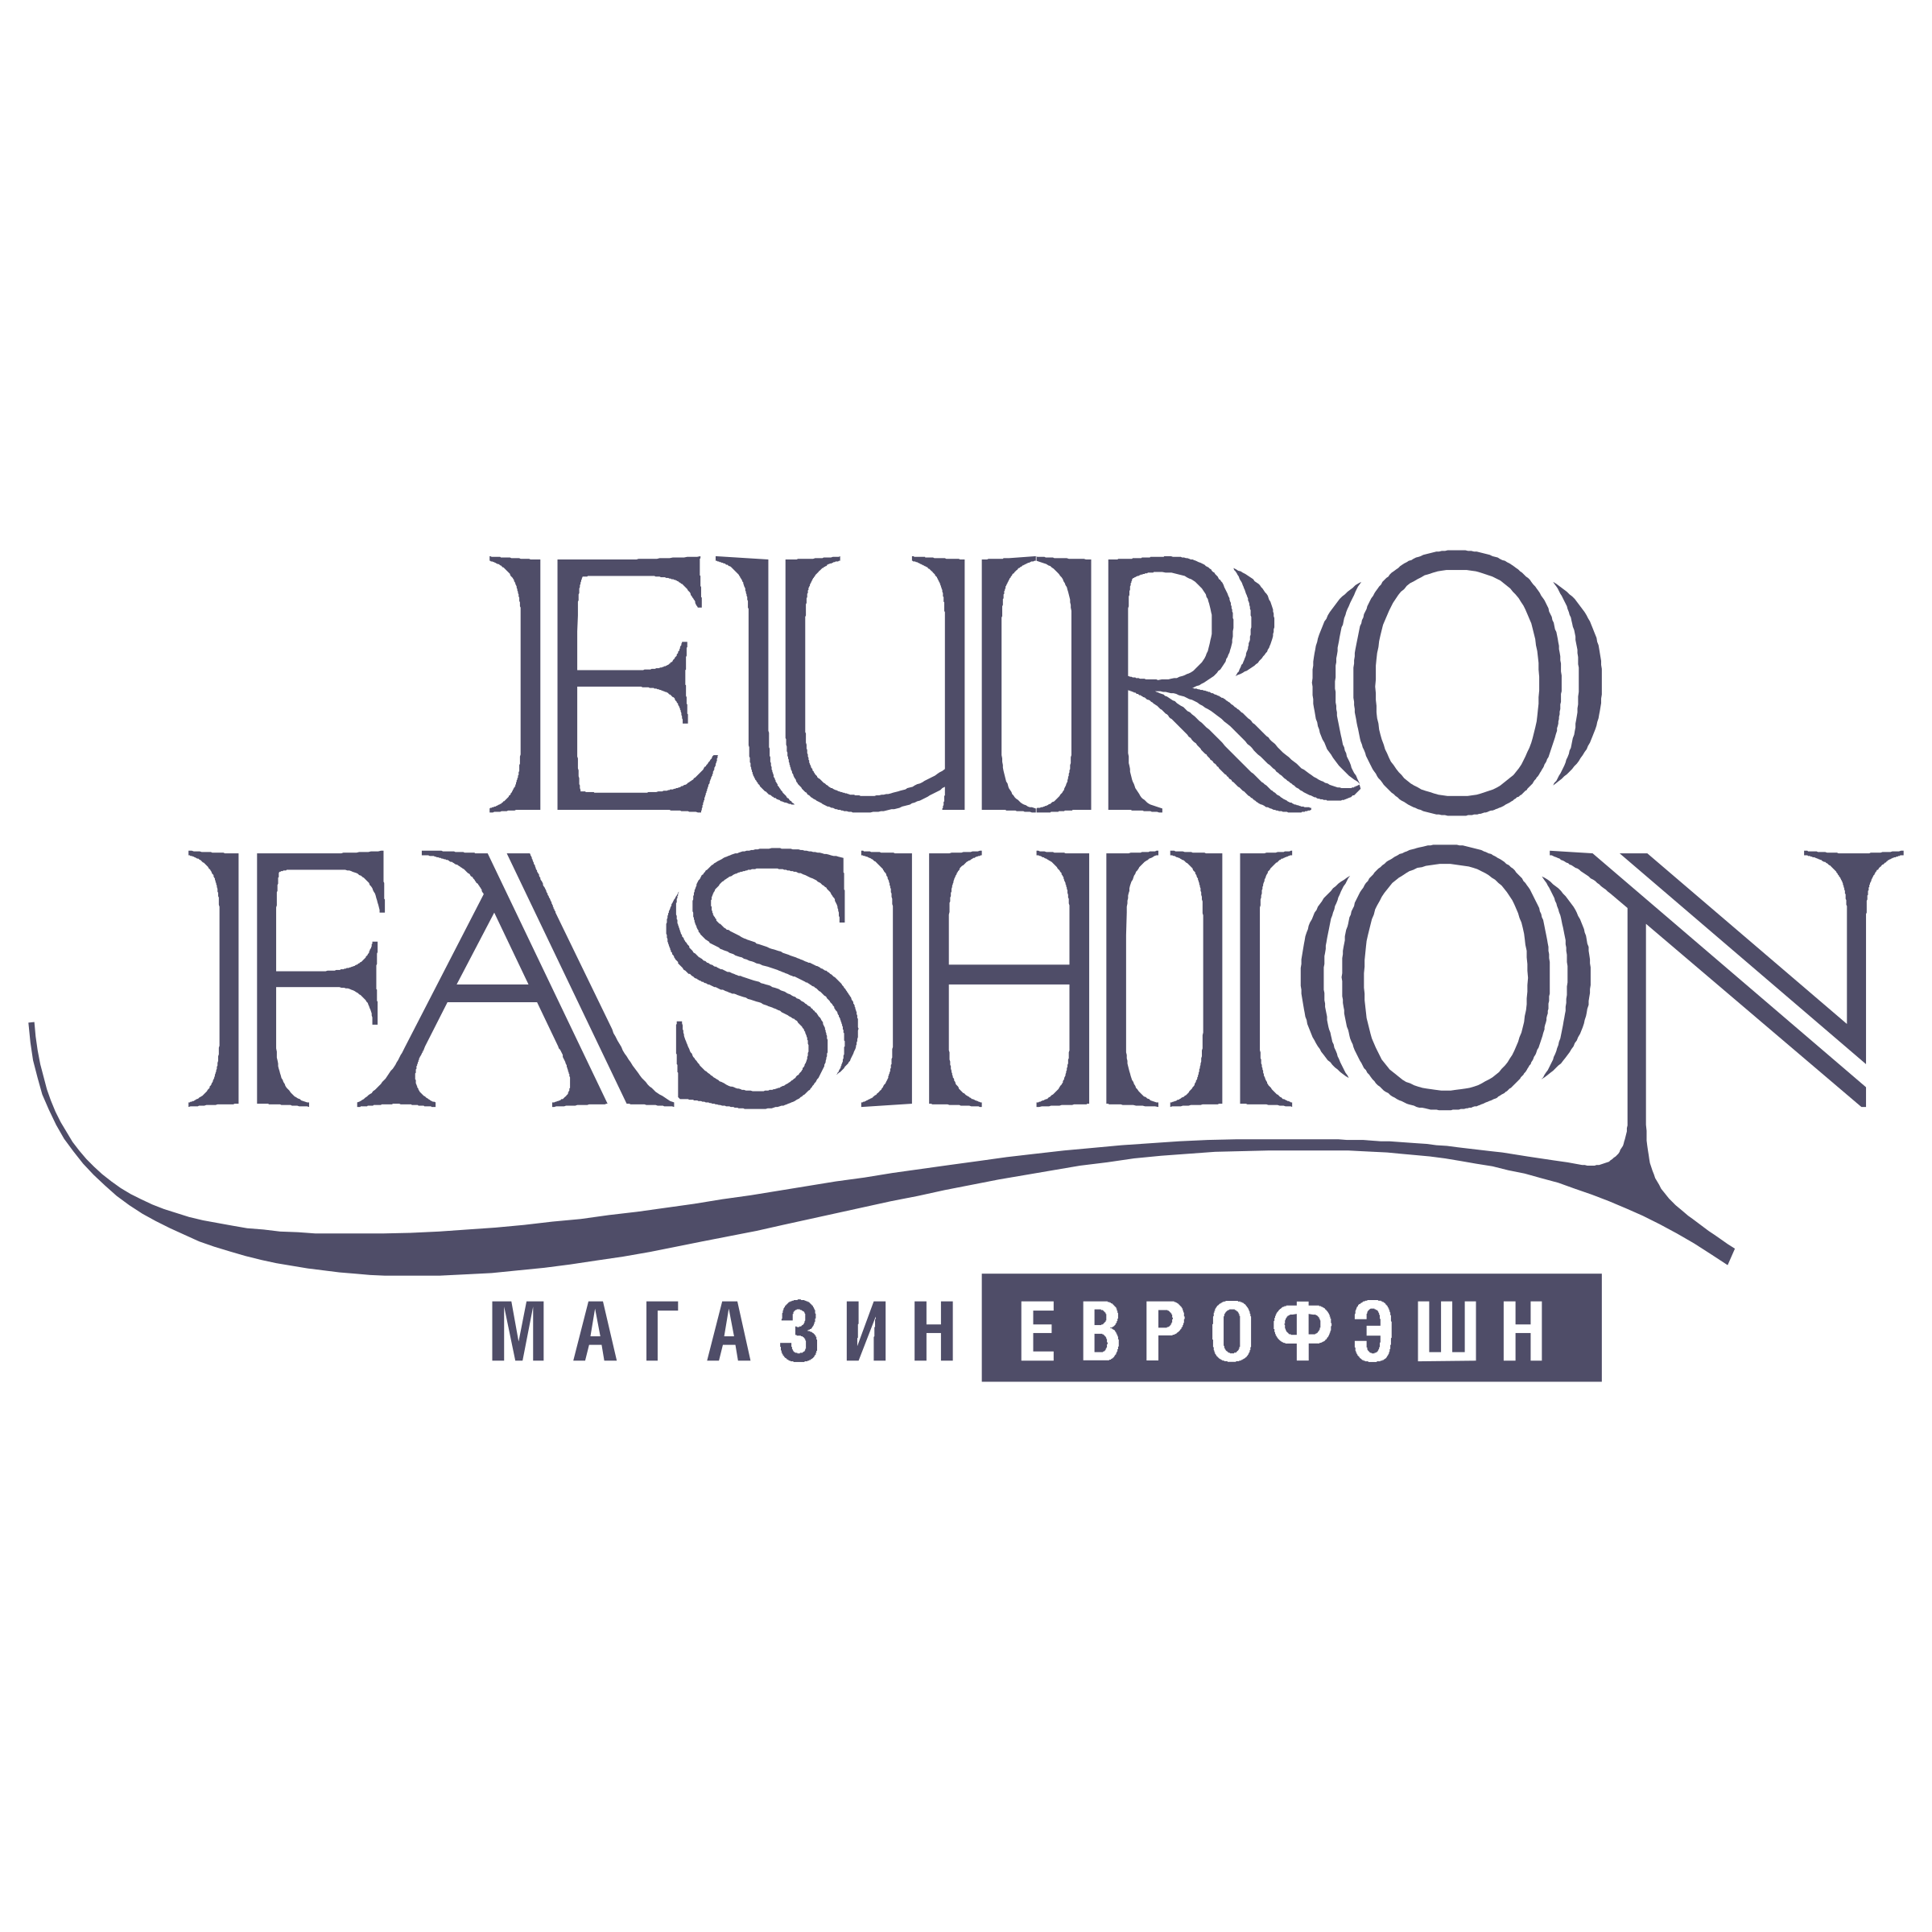 Transparent Fashion Logo - Euro Fashion Logo PNG Transparent & SVG Vector